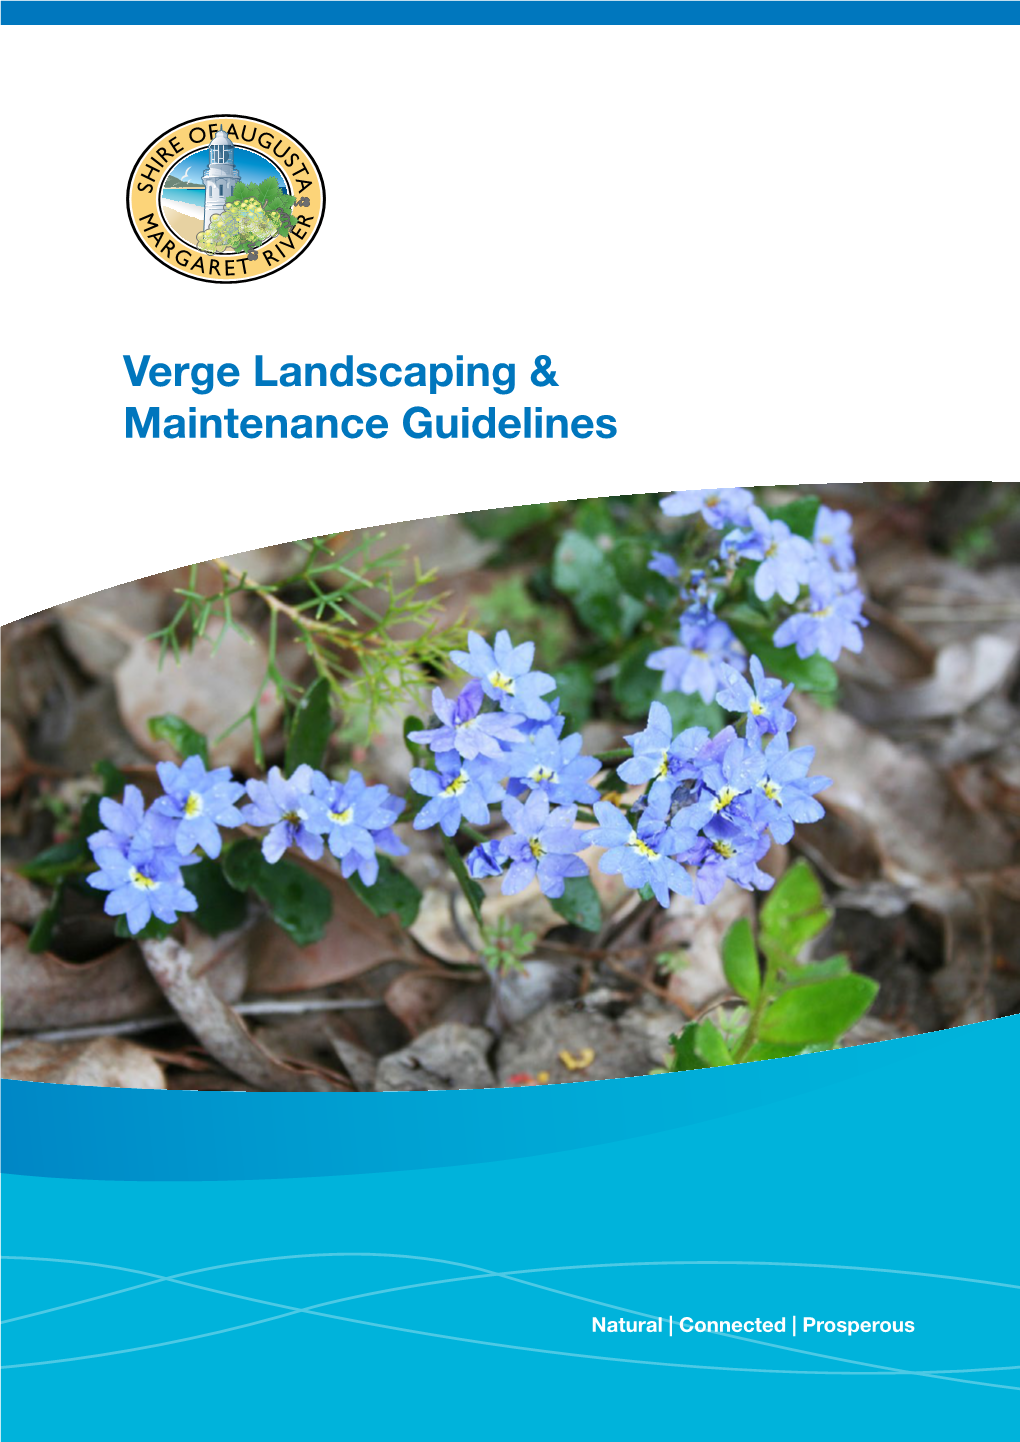 Verge Landscaping & Maintenance Guidelines